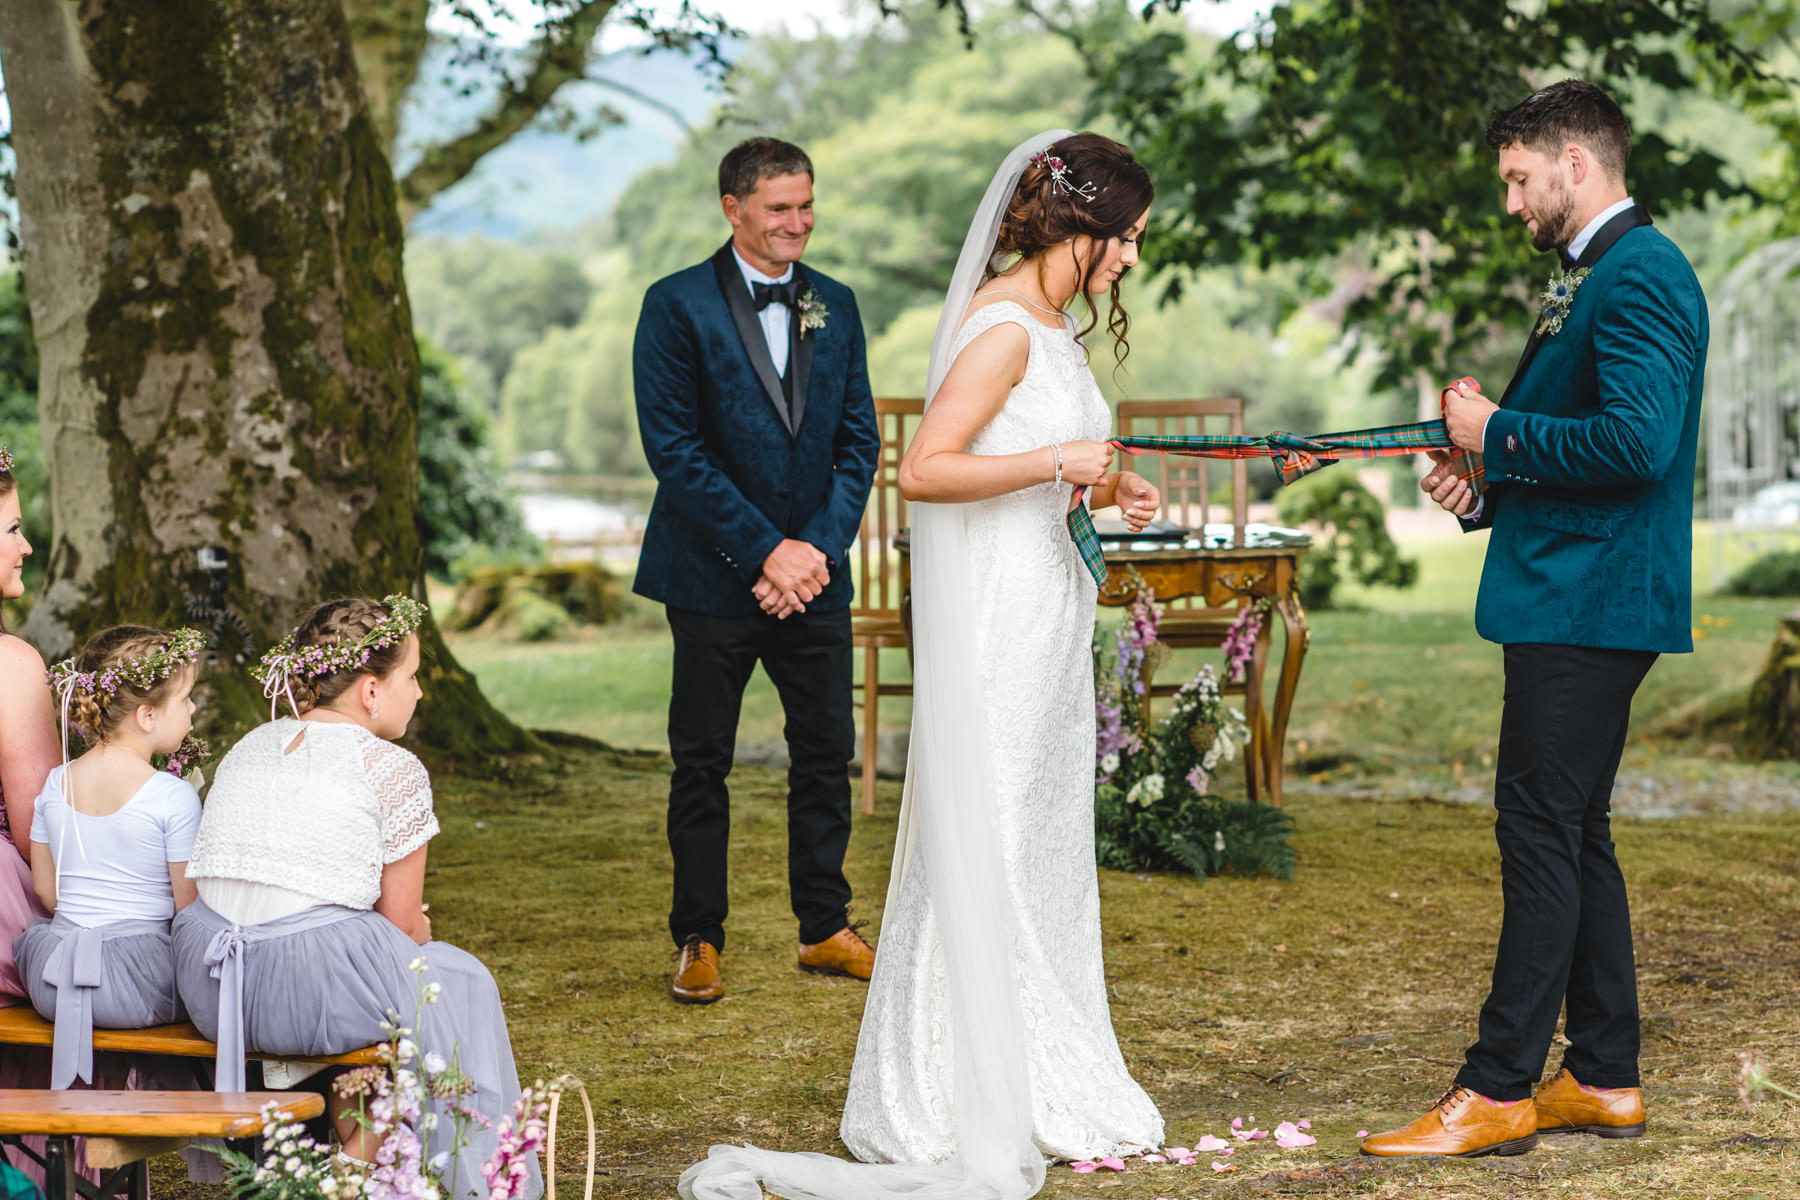 Outdoor wedding ceremony in Scotland